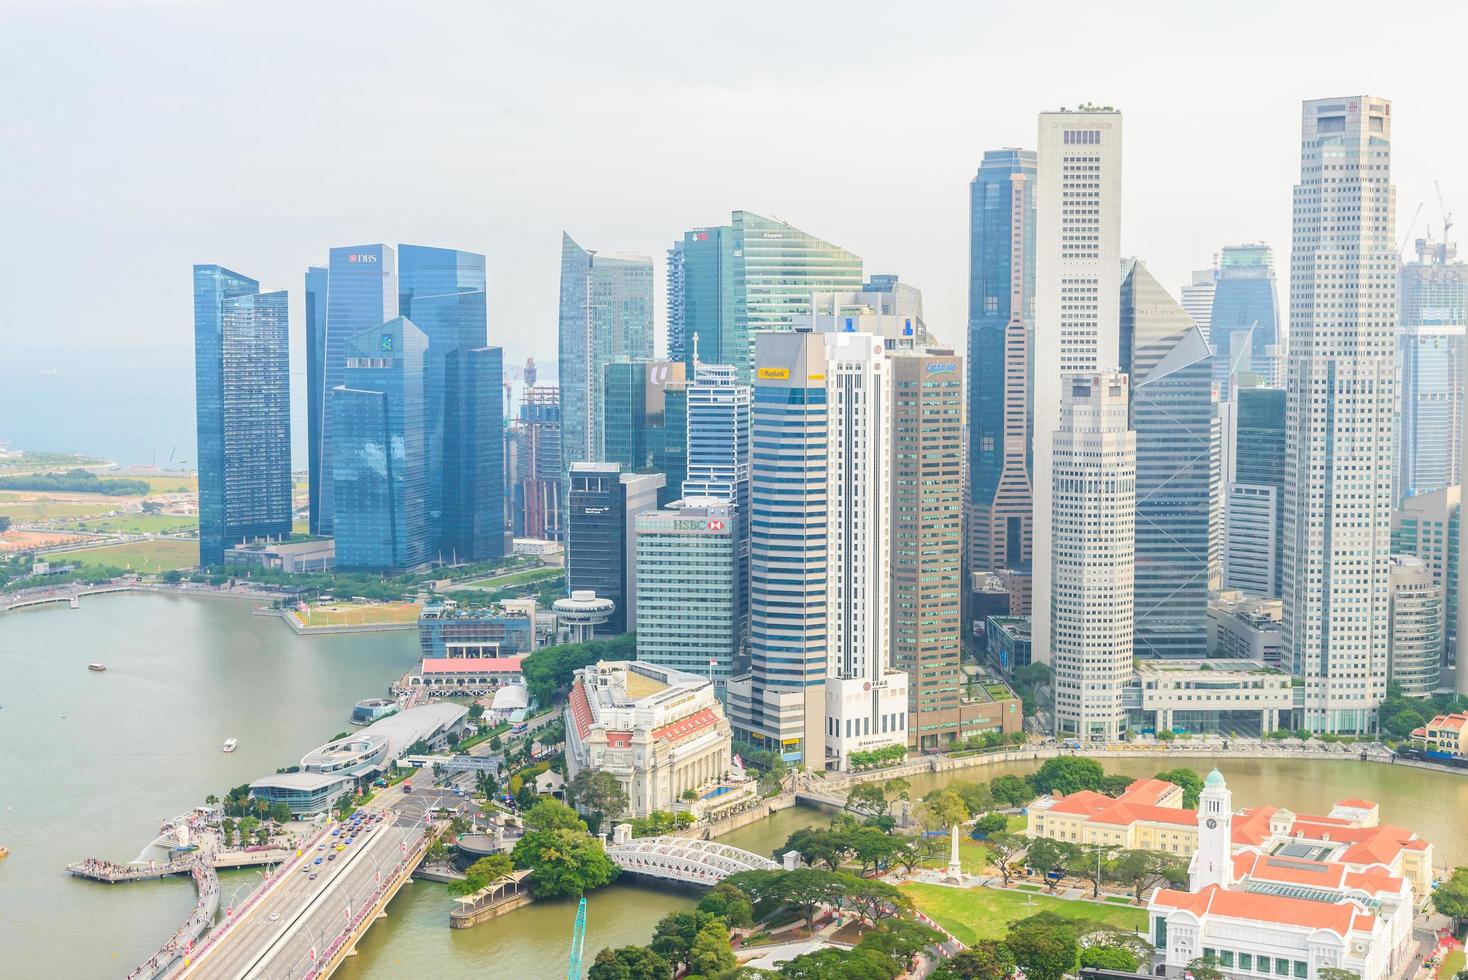 horizonte del paisaje urbano de singapur foto